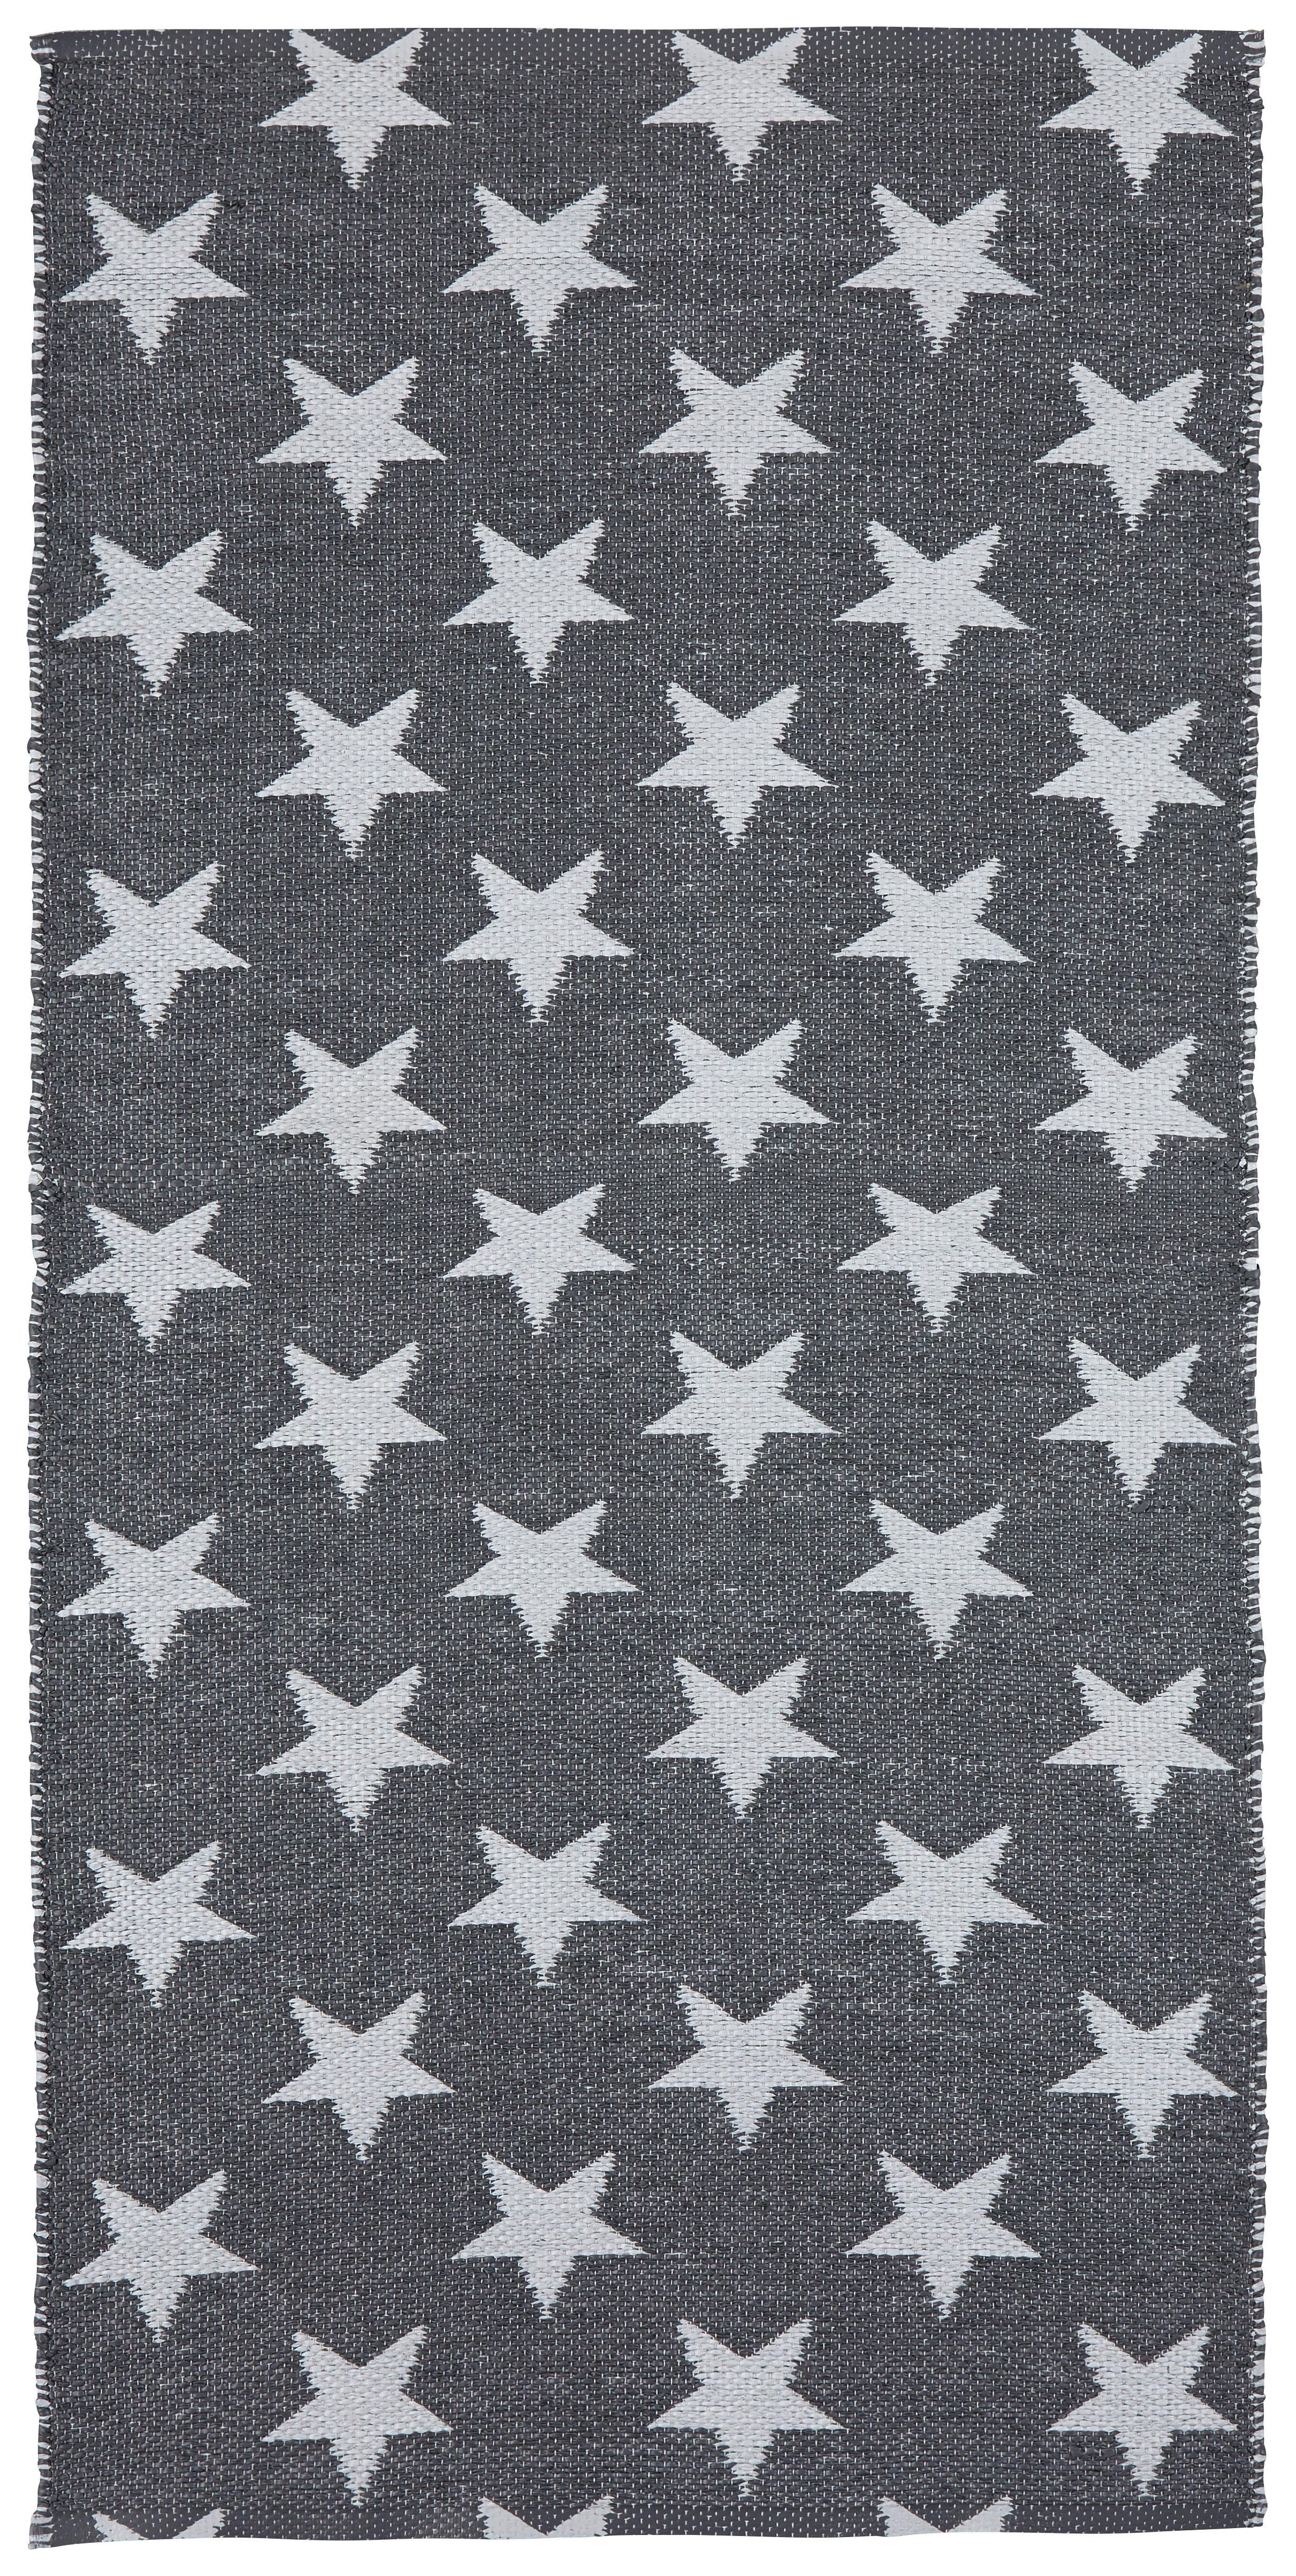 Outdoorteppich "Stars" ca. 70x140 cm, grau/weiß - Weiß/Grau, MODERN, Textil (70/140cm) - Bessagi Garden